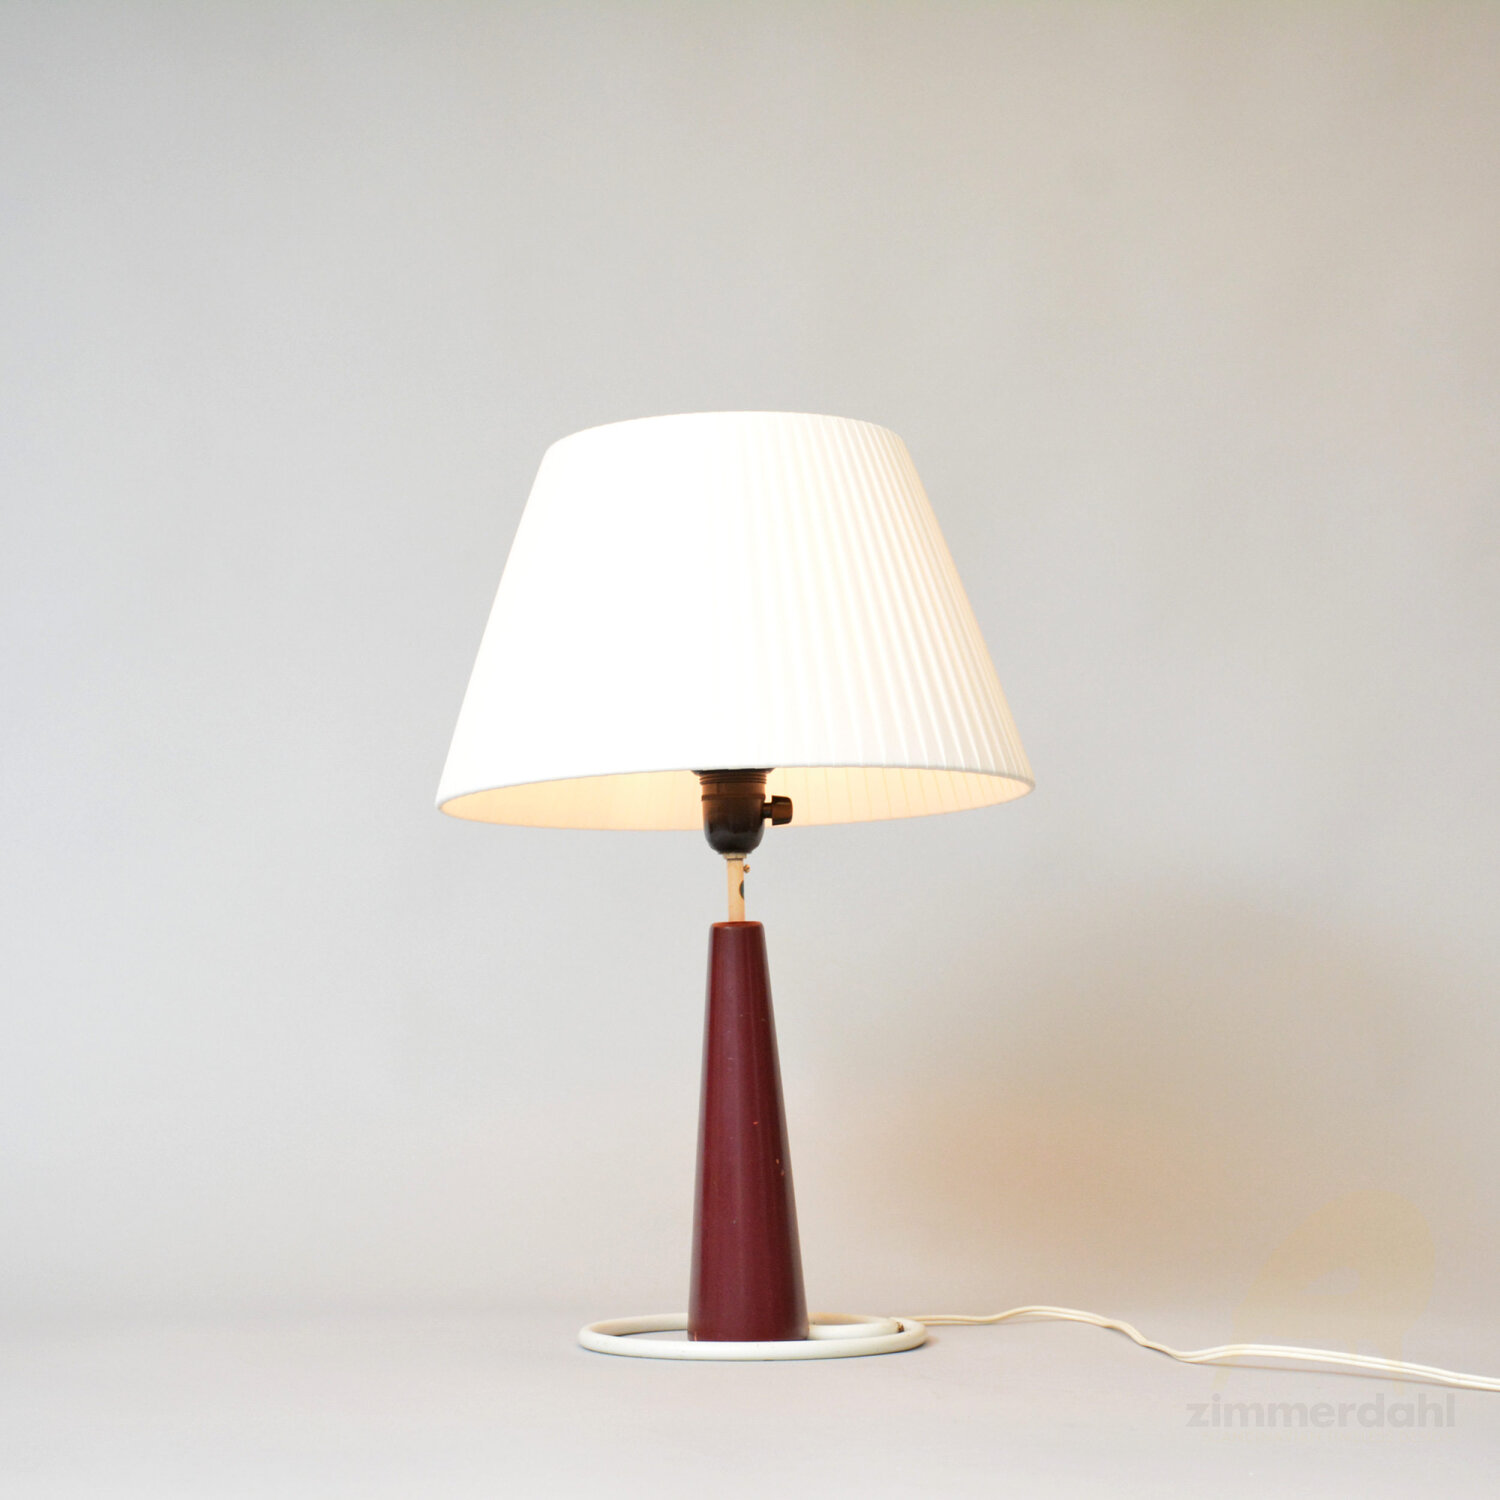 Table lamp for Bergboms, Malmö, Sweden — Scandinavian Timeless.Design -  Zimmerdahl Antiques & Design AB